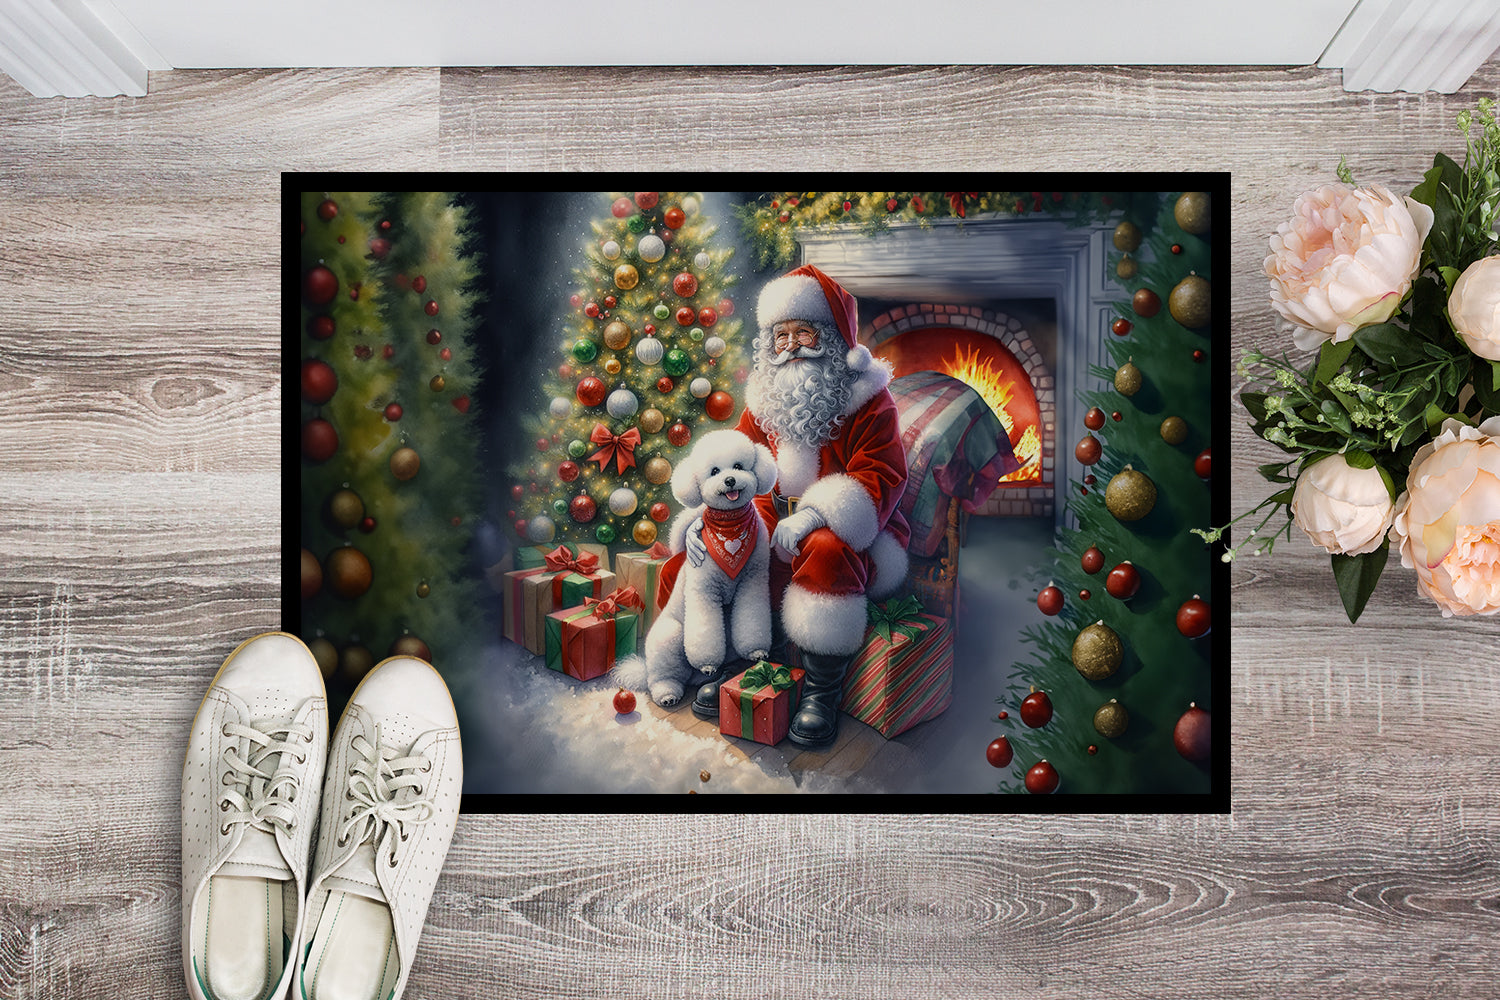 Bichon Frise and Santa Claus Doormat